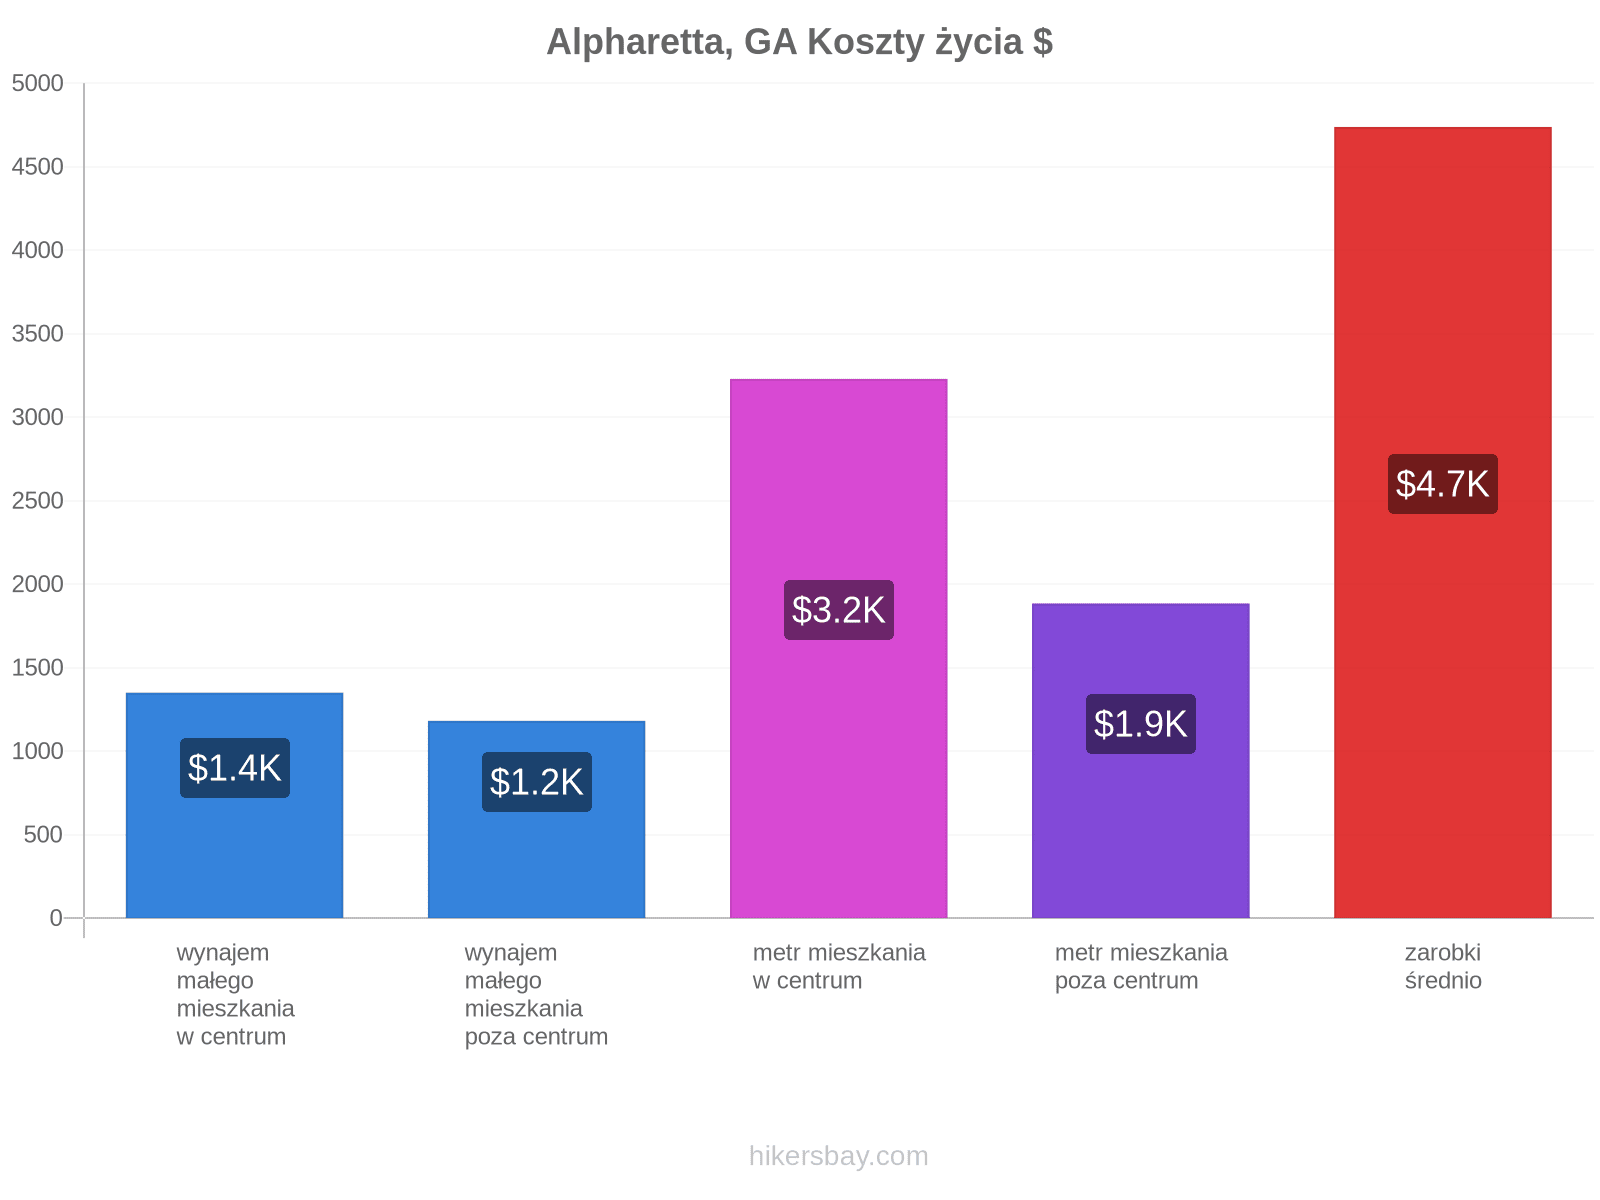 Alpharetta, GA koszty życia hikersbay.com